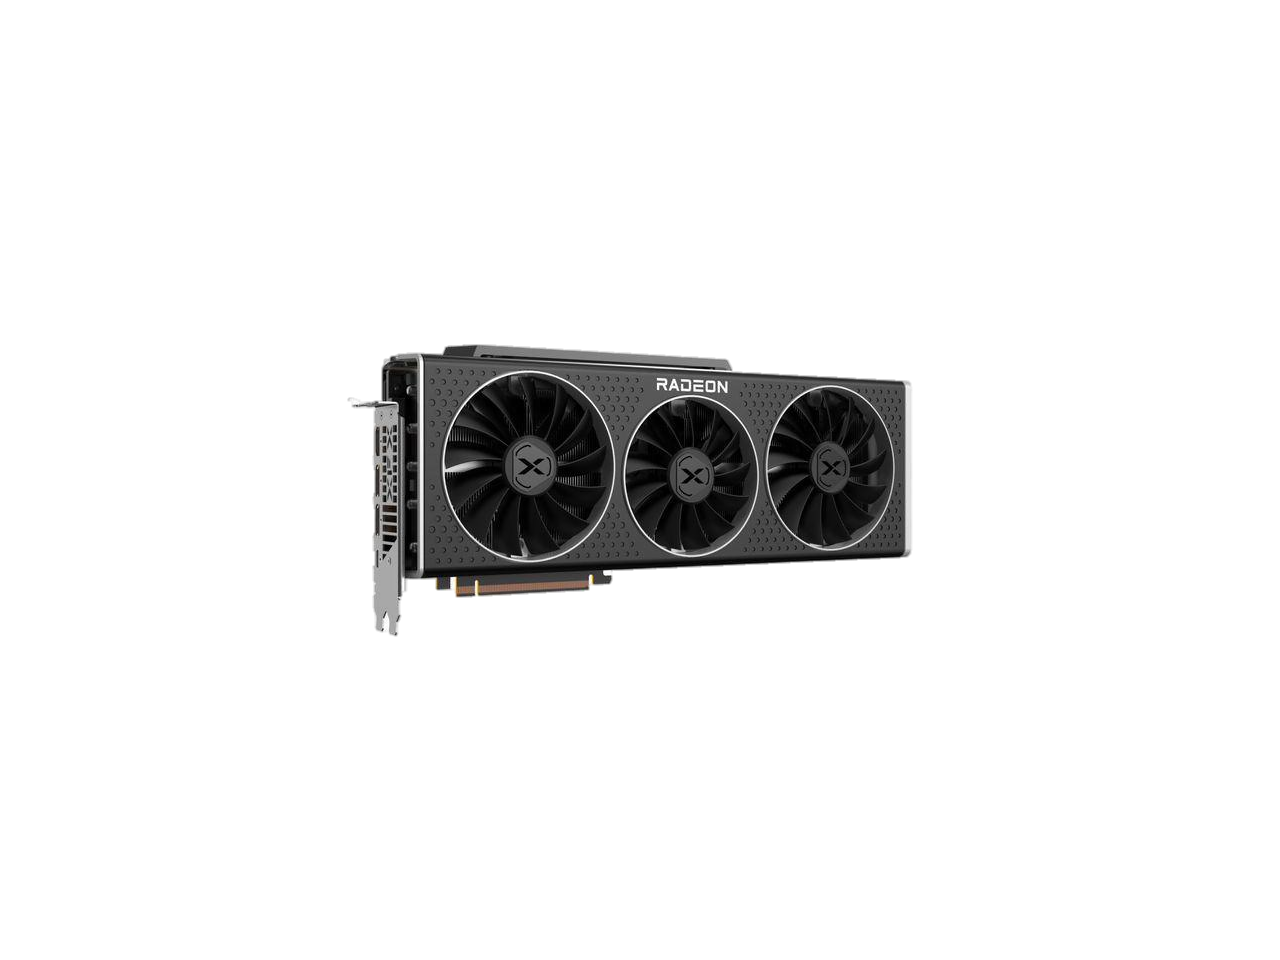 XFX Speedster MERC 319 AMD RX 6950 XT Black Gaming Graphics Card with 16GB GDDR6 RX-695XATBD9